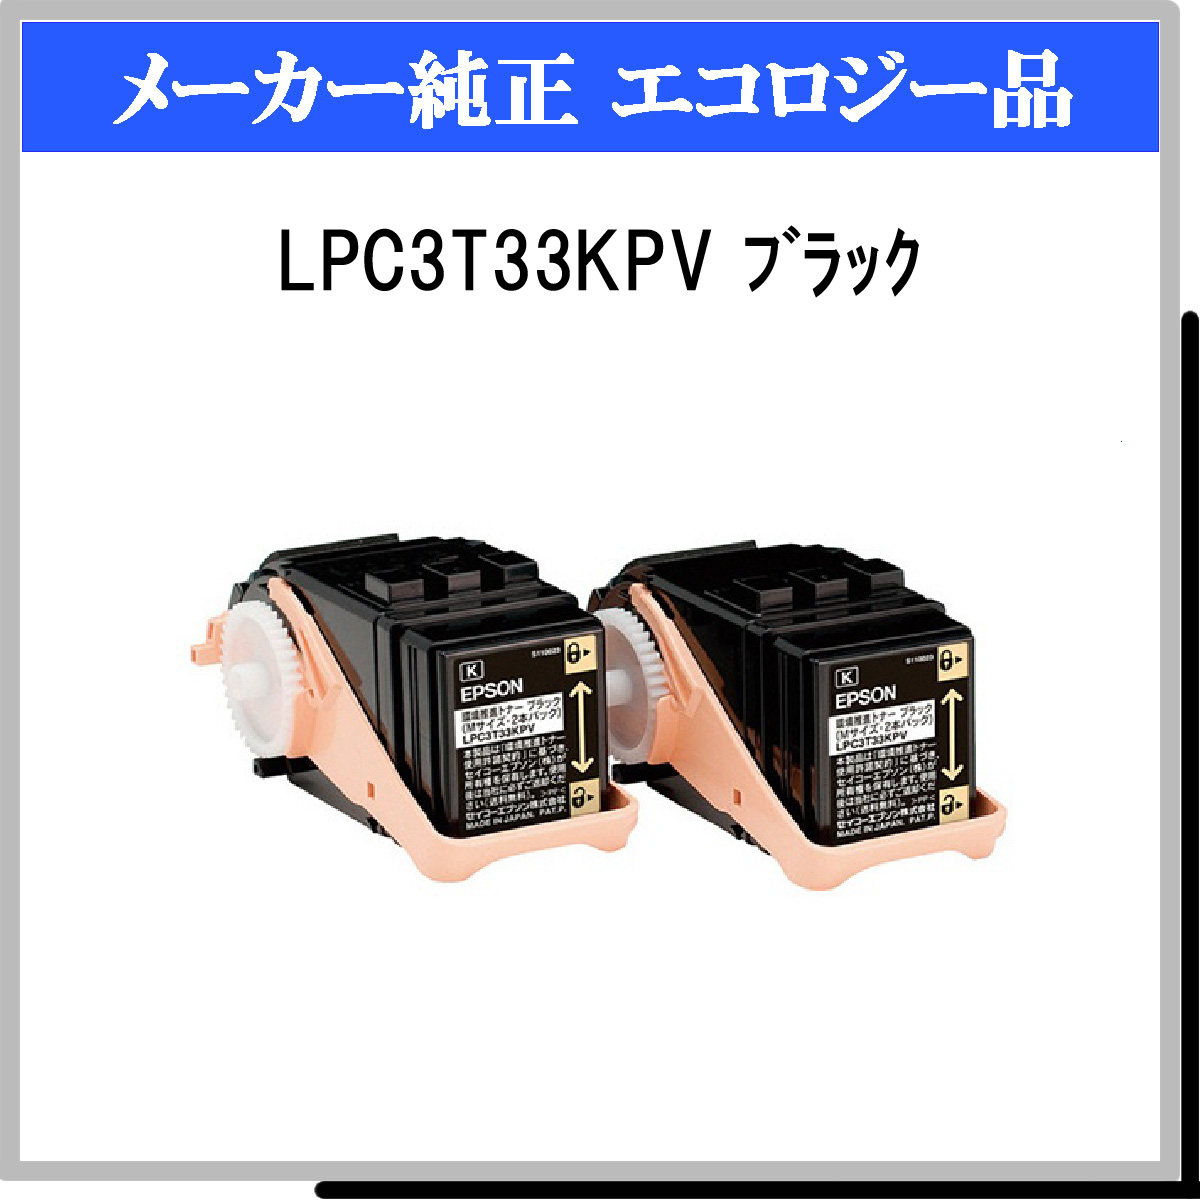 LPC3T33KPV (2P) 環境推進ﾄﾅｰ